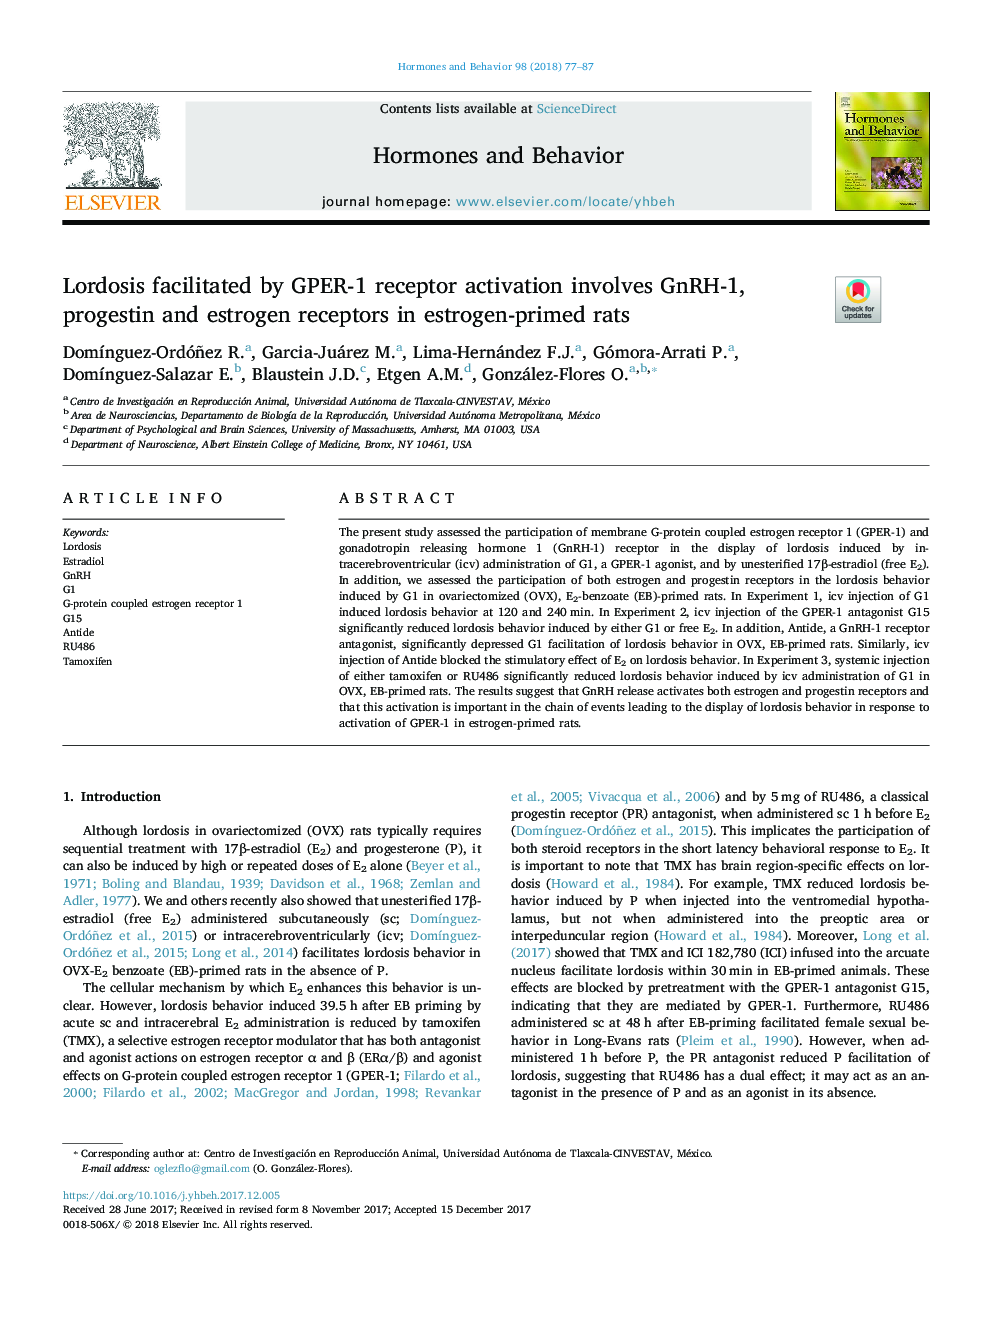 Lordosis facilitated by GPER-1 receptor activation involves GnRH-1, progestin and estrogen receptors in estrogen-primed rats